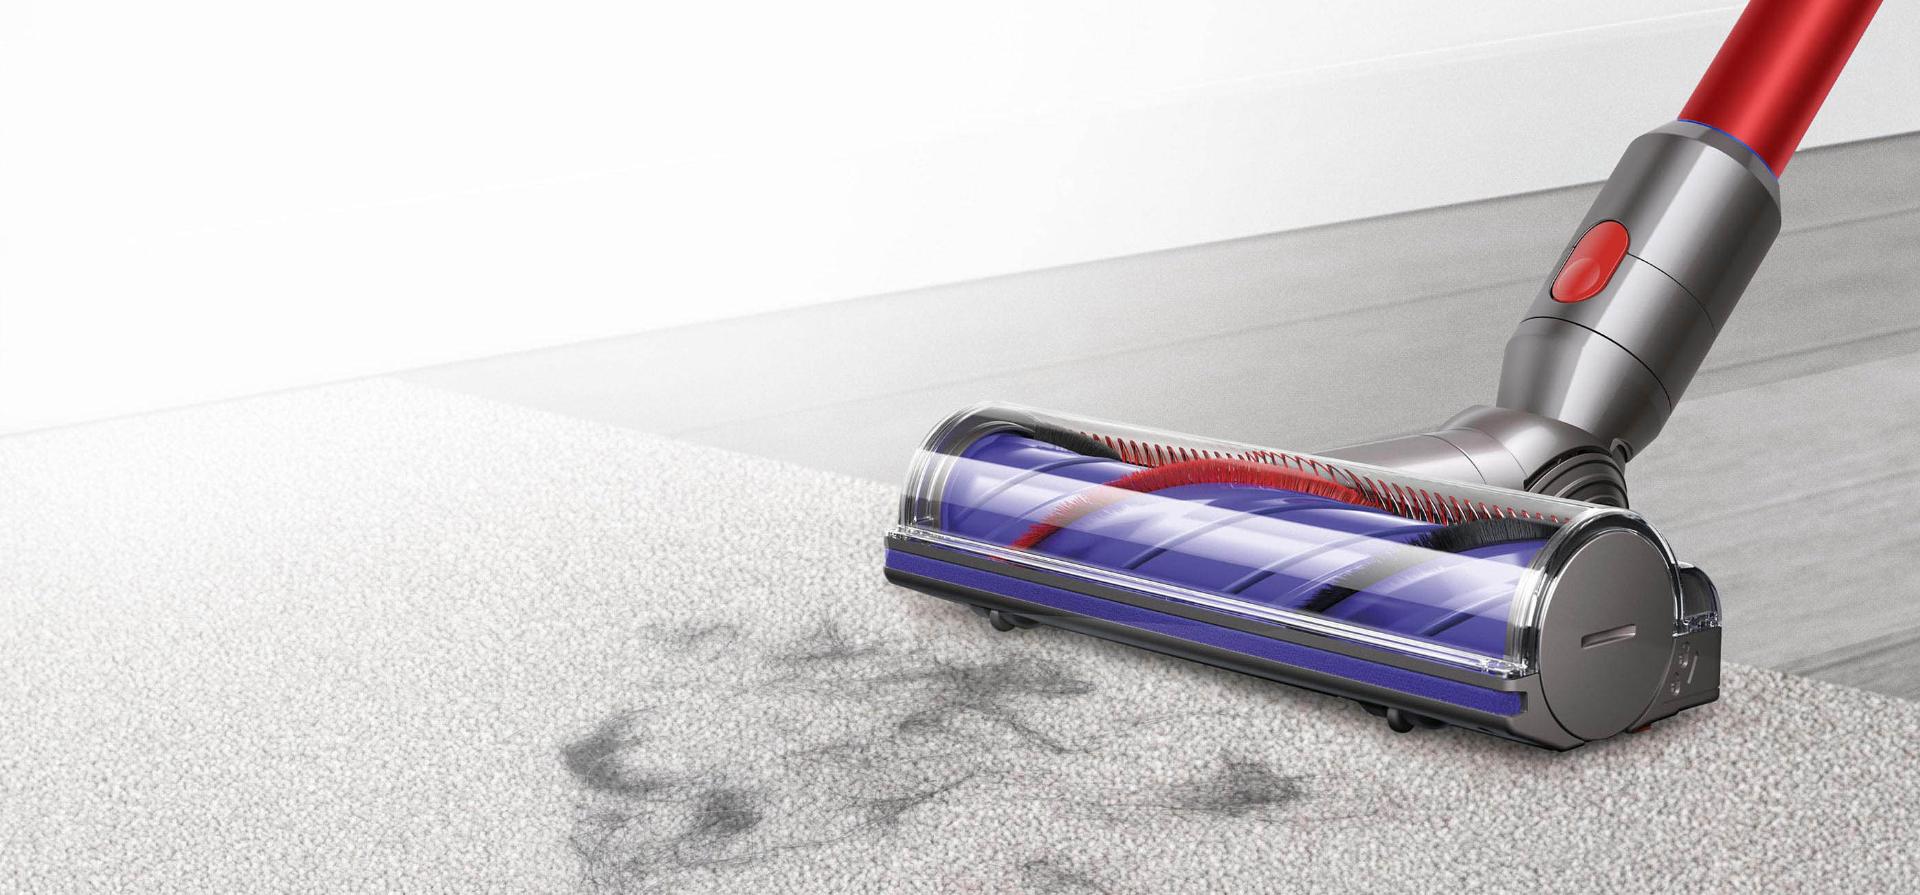 Motorbar cleaner head vacuuming pet hair from a carpet